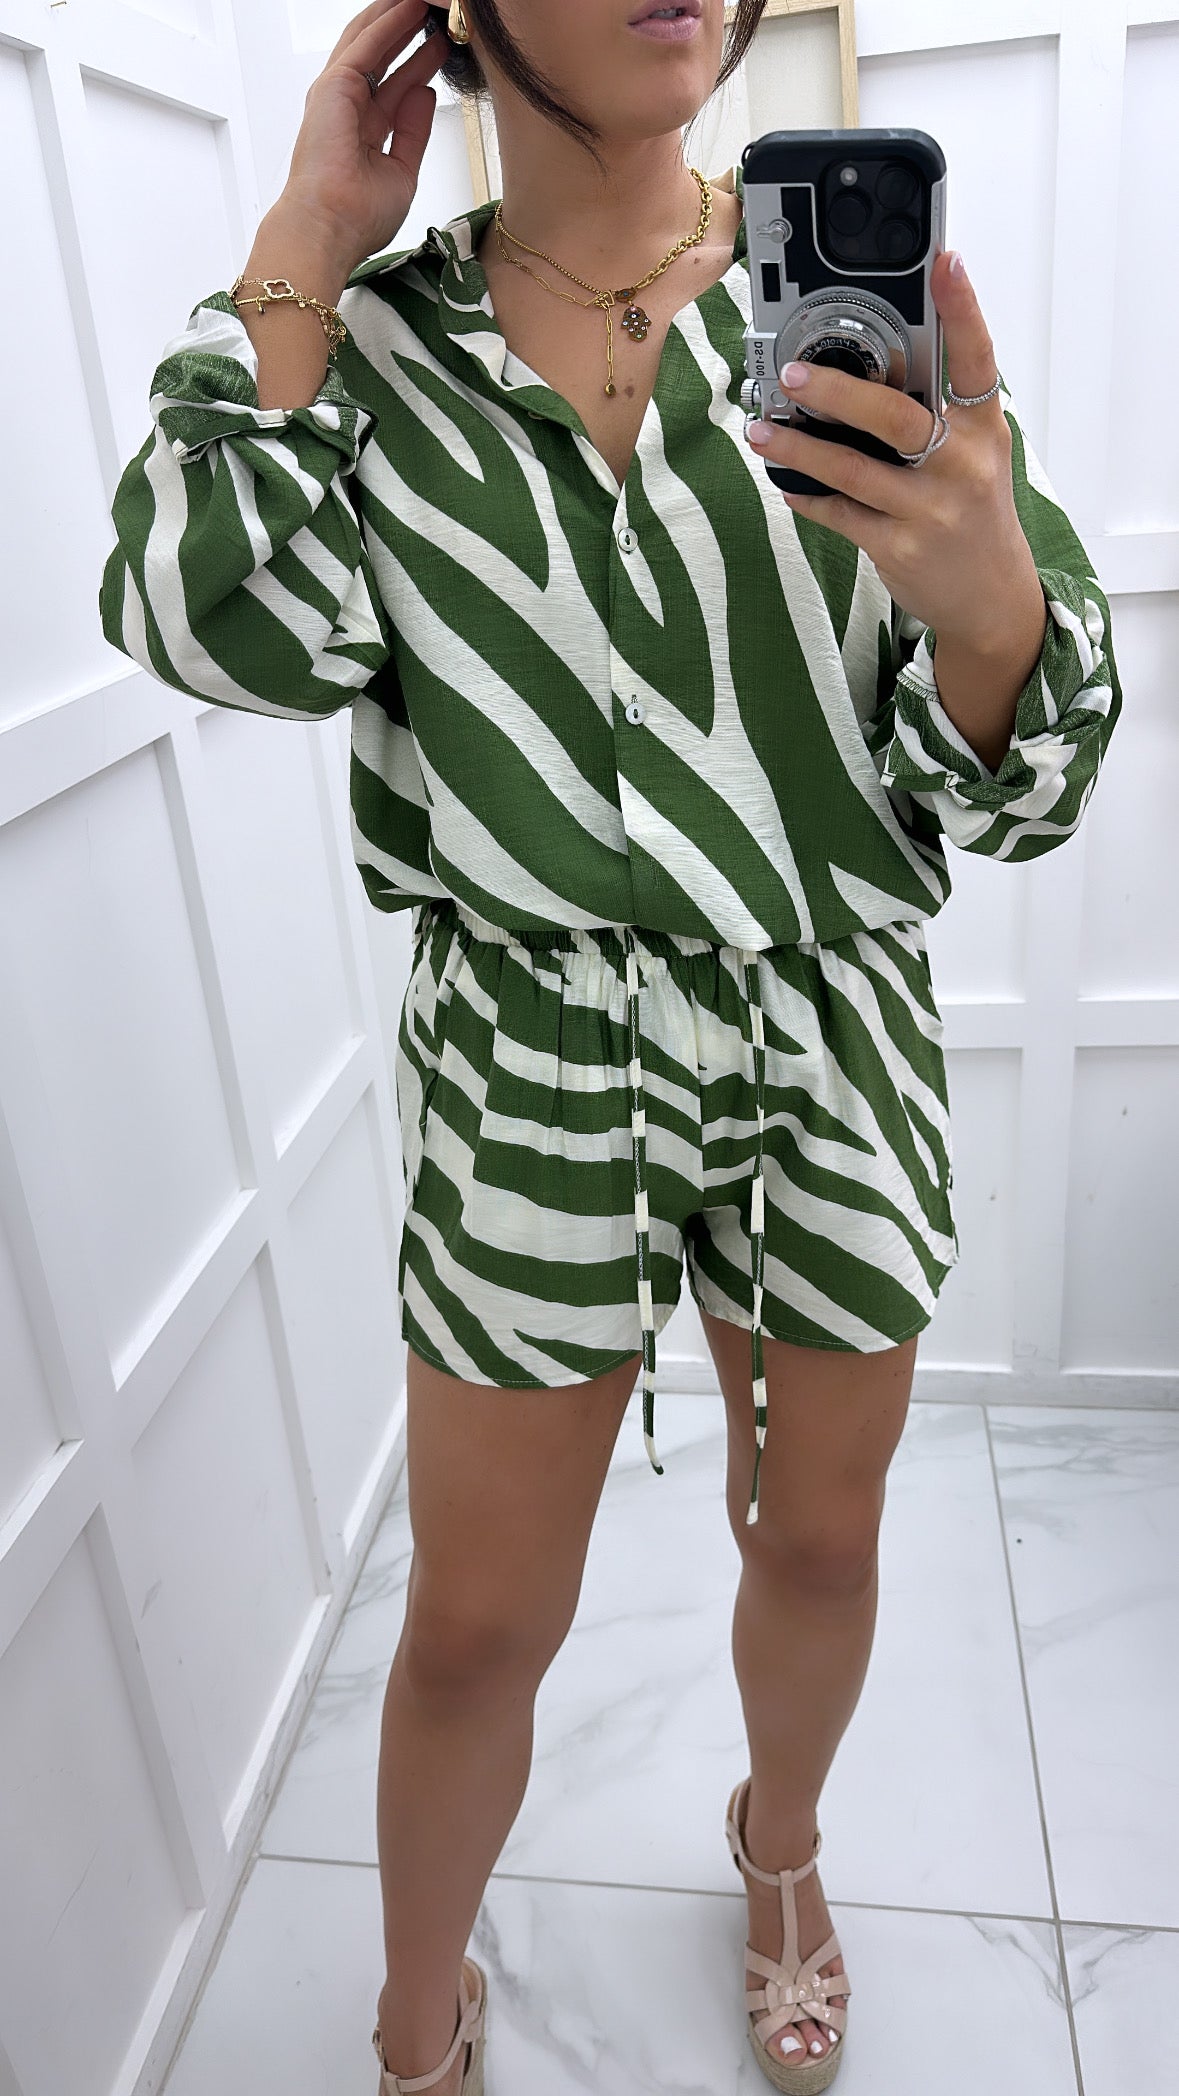 ARABELLA green zebra shirt and shorts co-ord